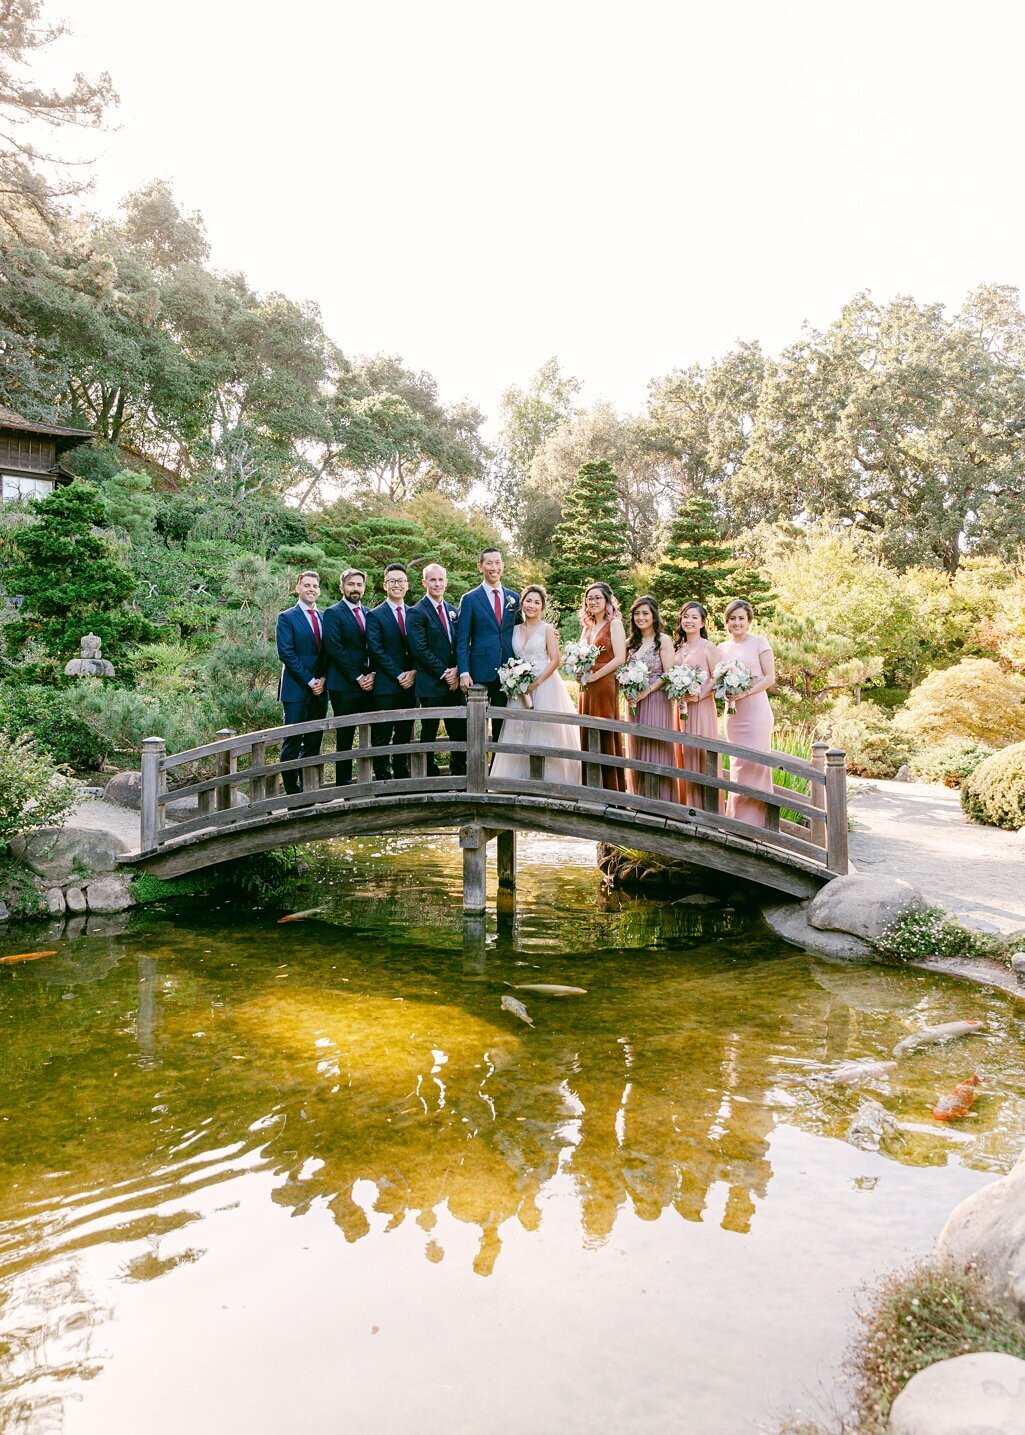 Jessie-Barksdale-Photography_Hakone-Gardens-Saratoga_San-Francisco-Bay-Area-Wedding-Photographer_0053